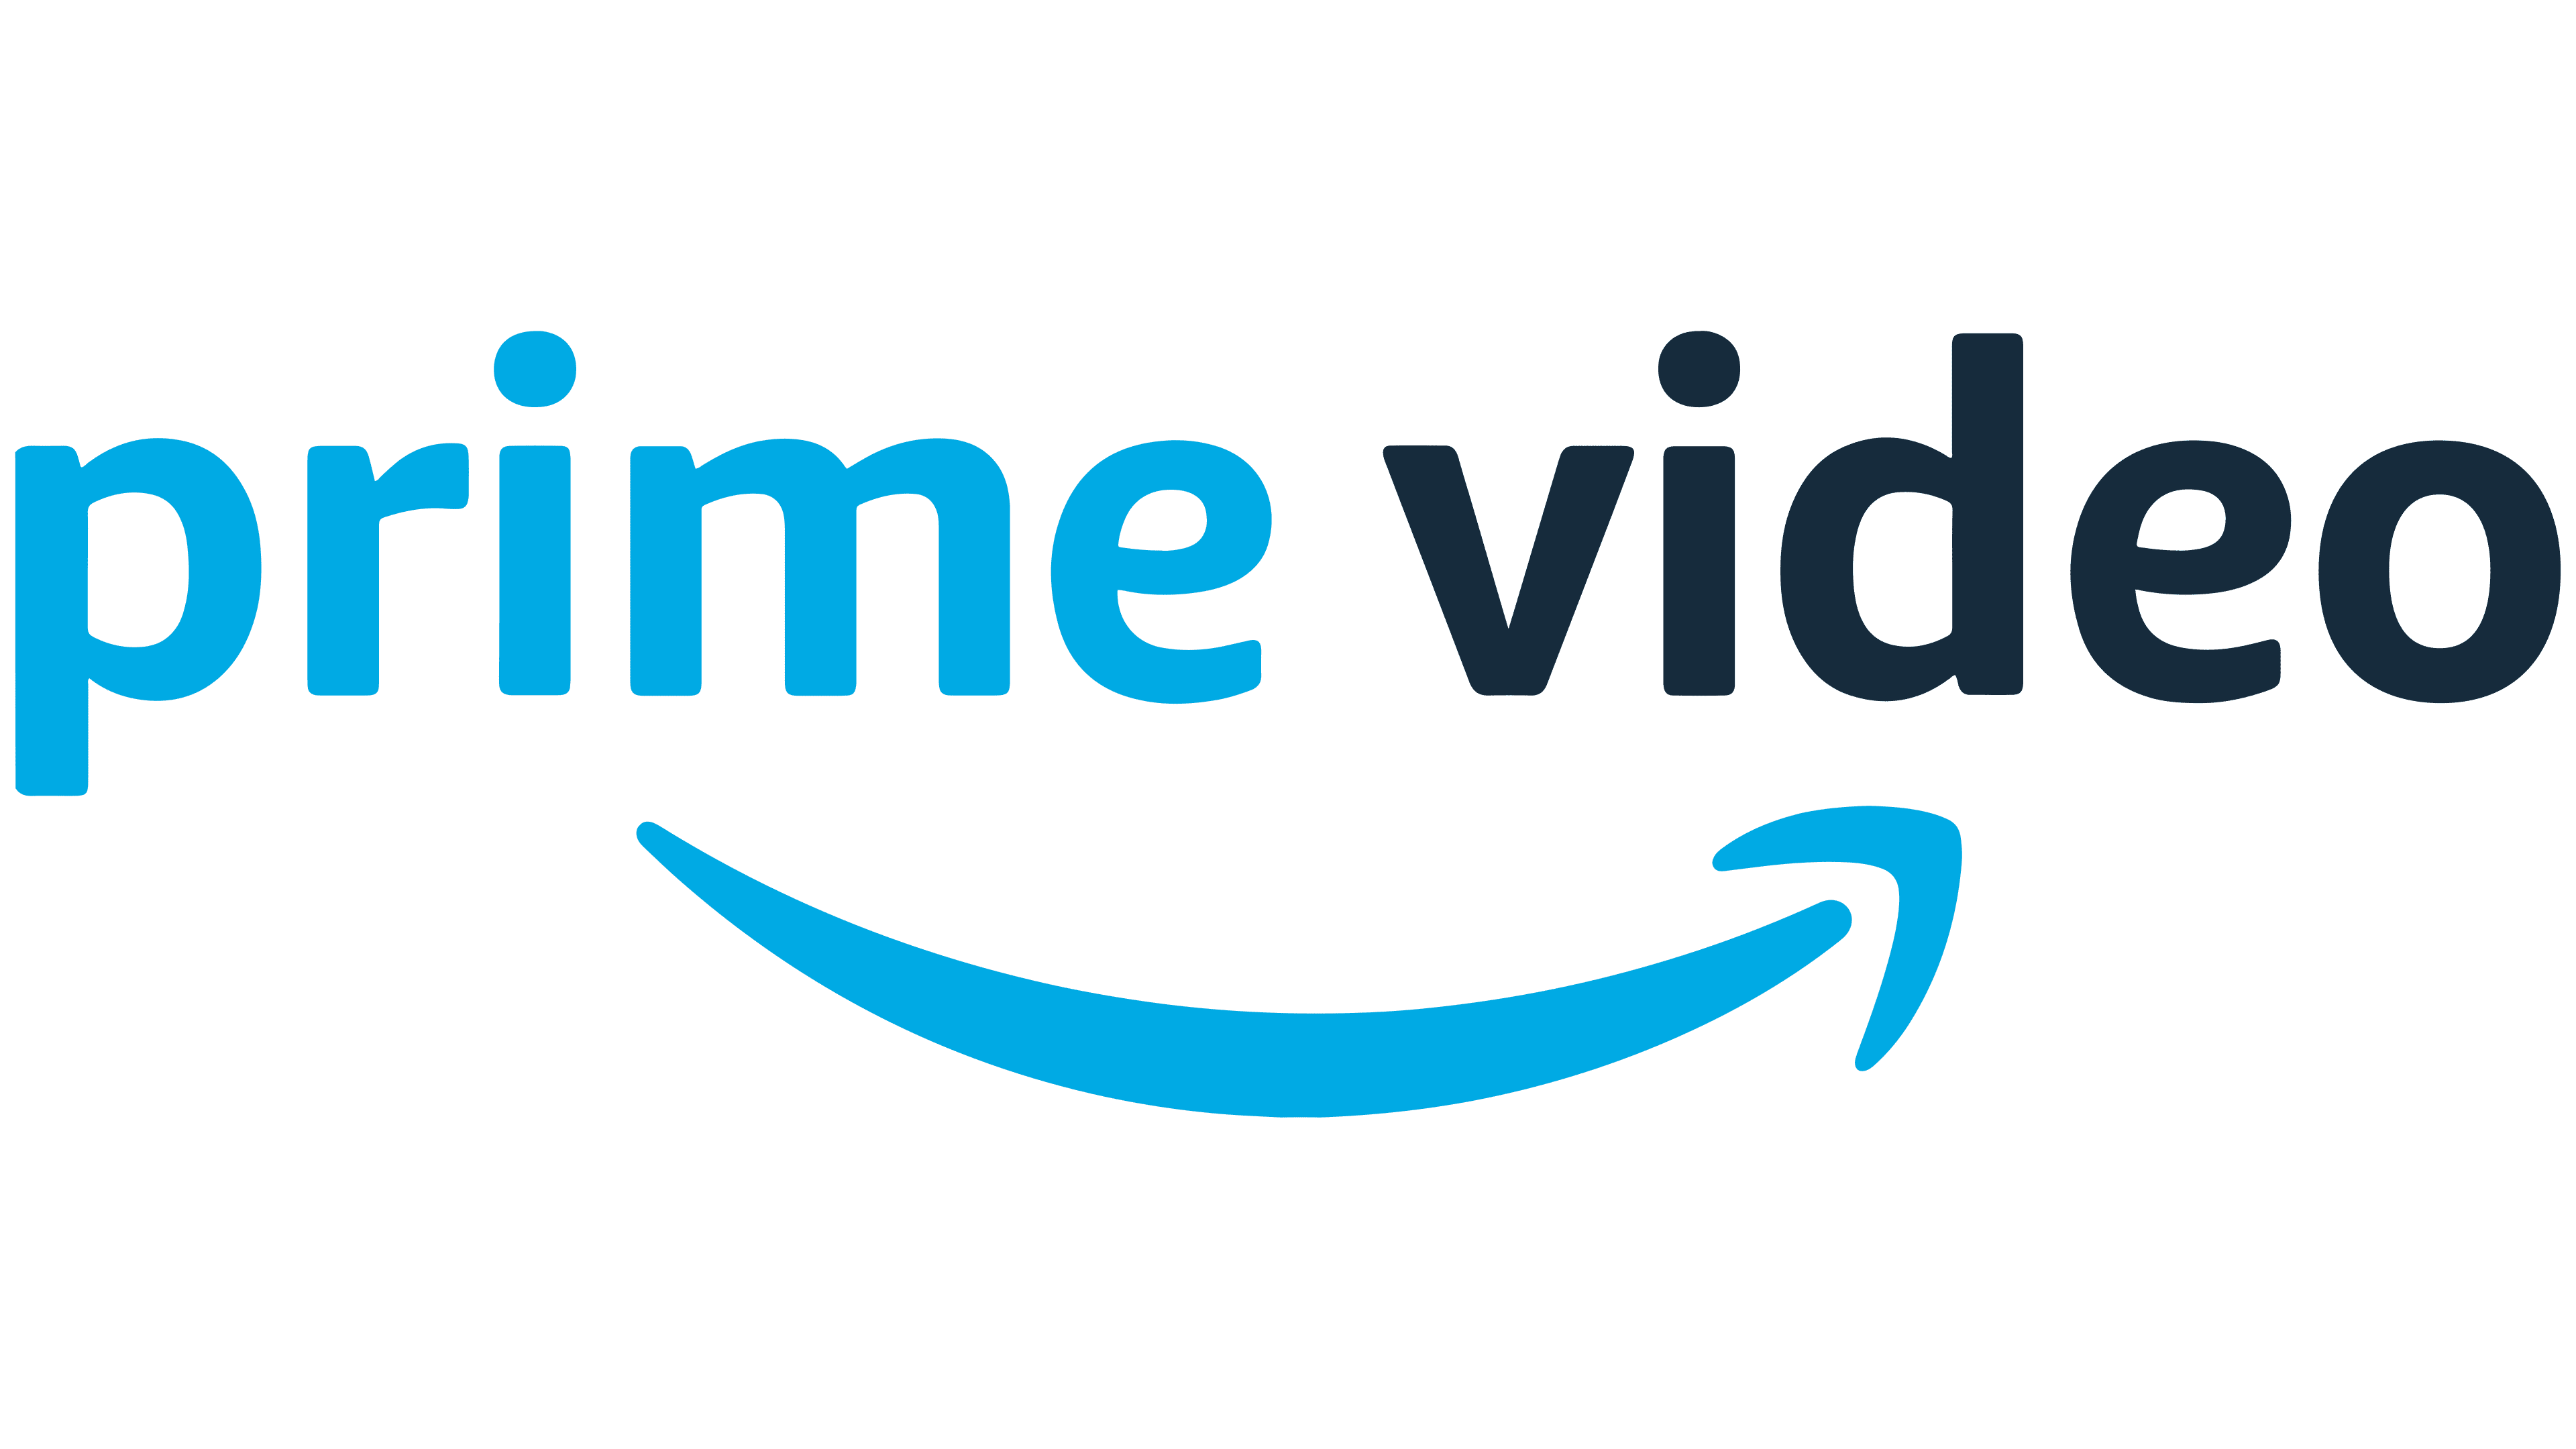 Amazon Prime Video Logo Valor História Png